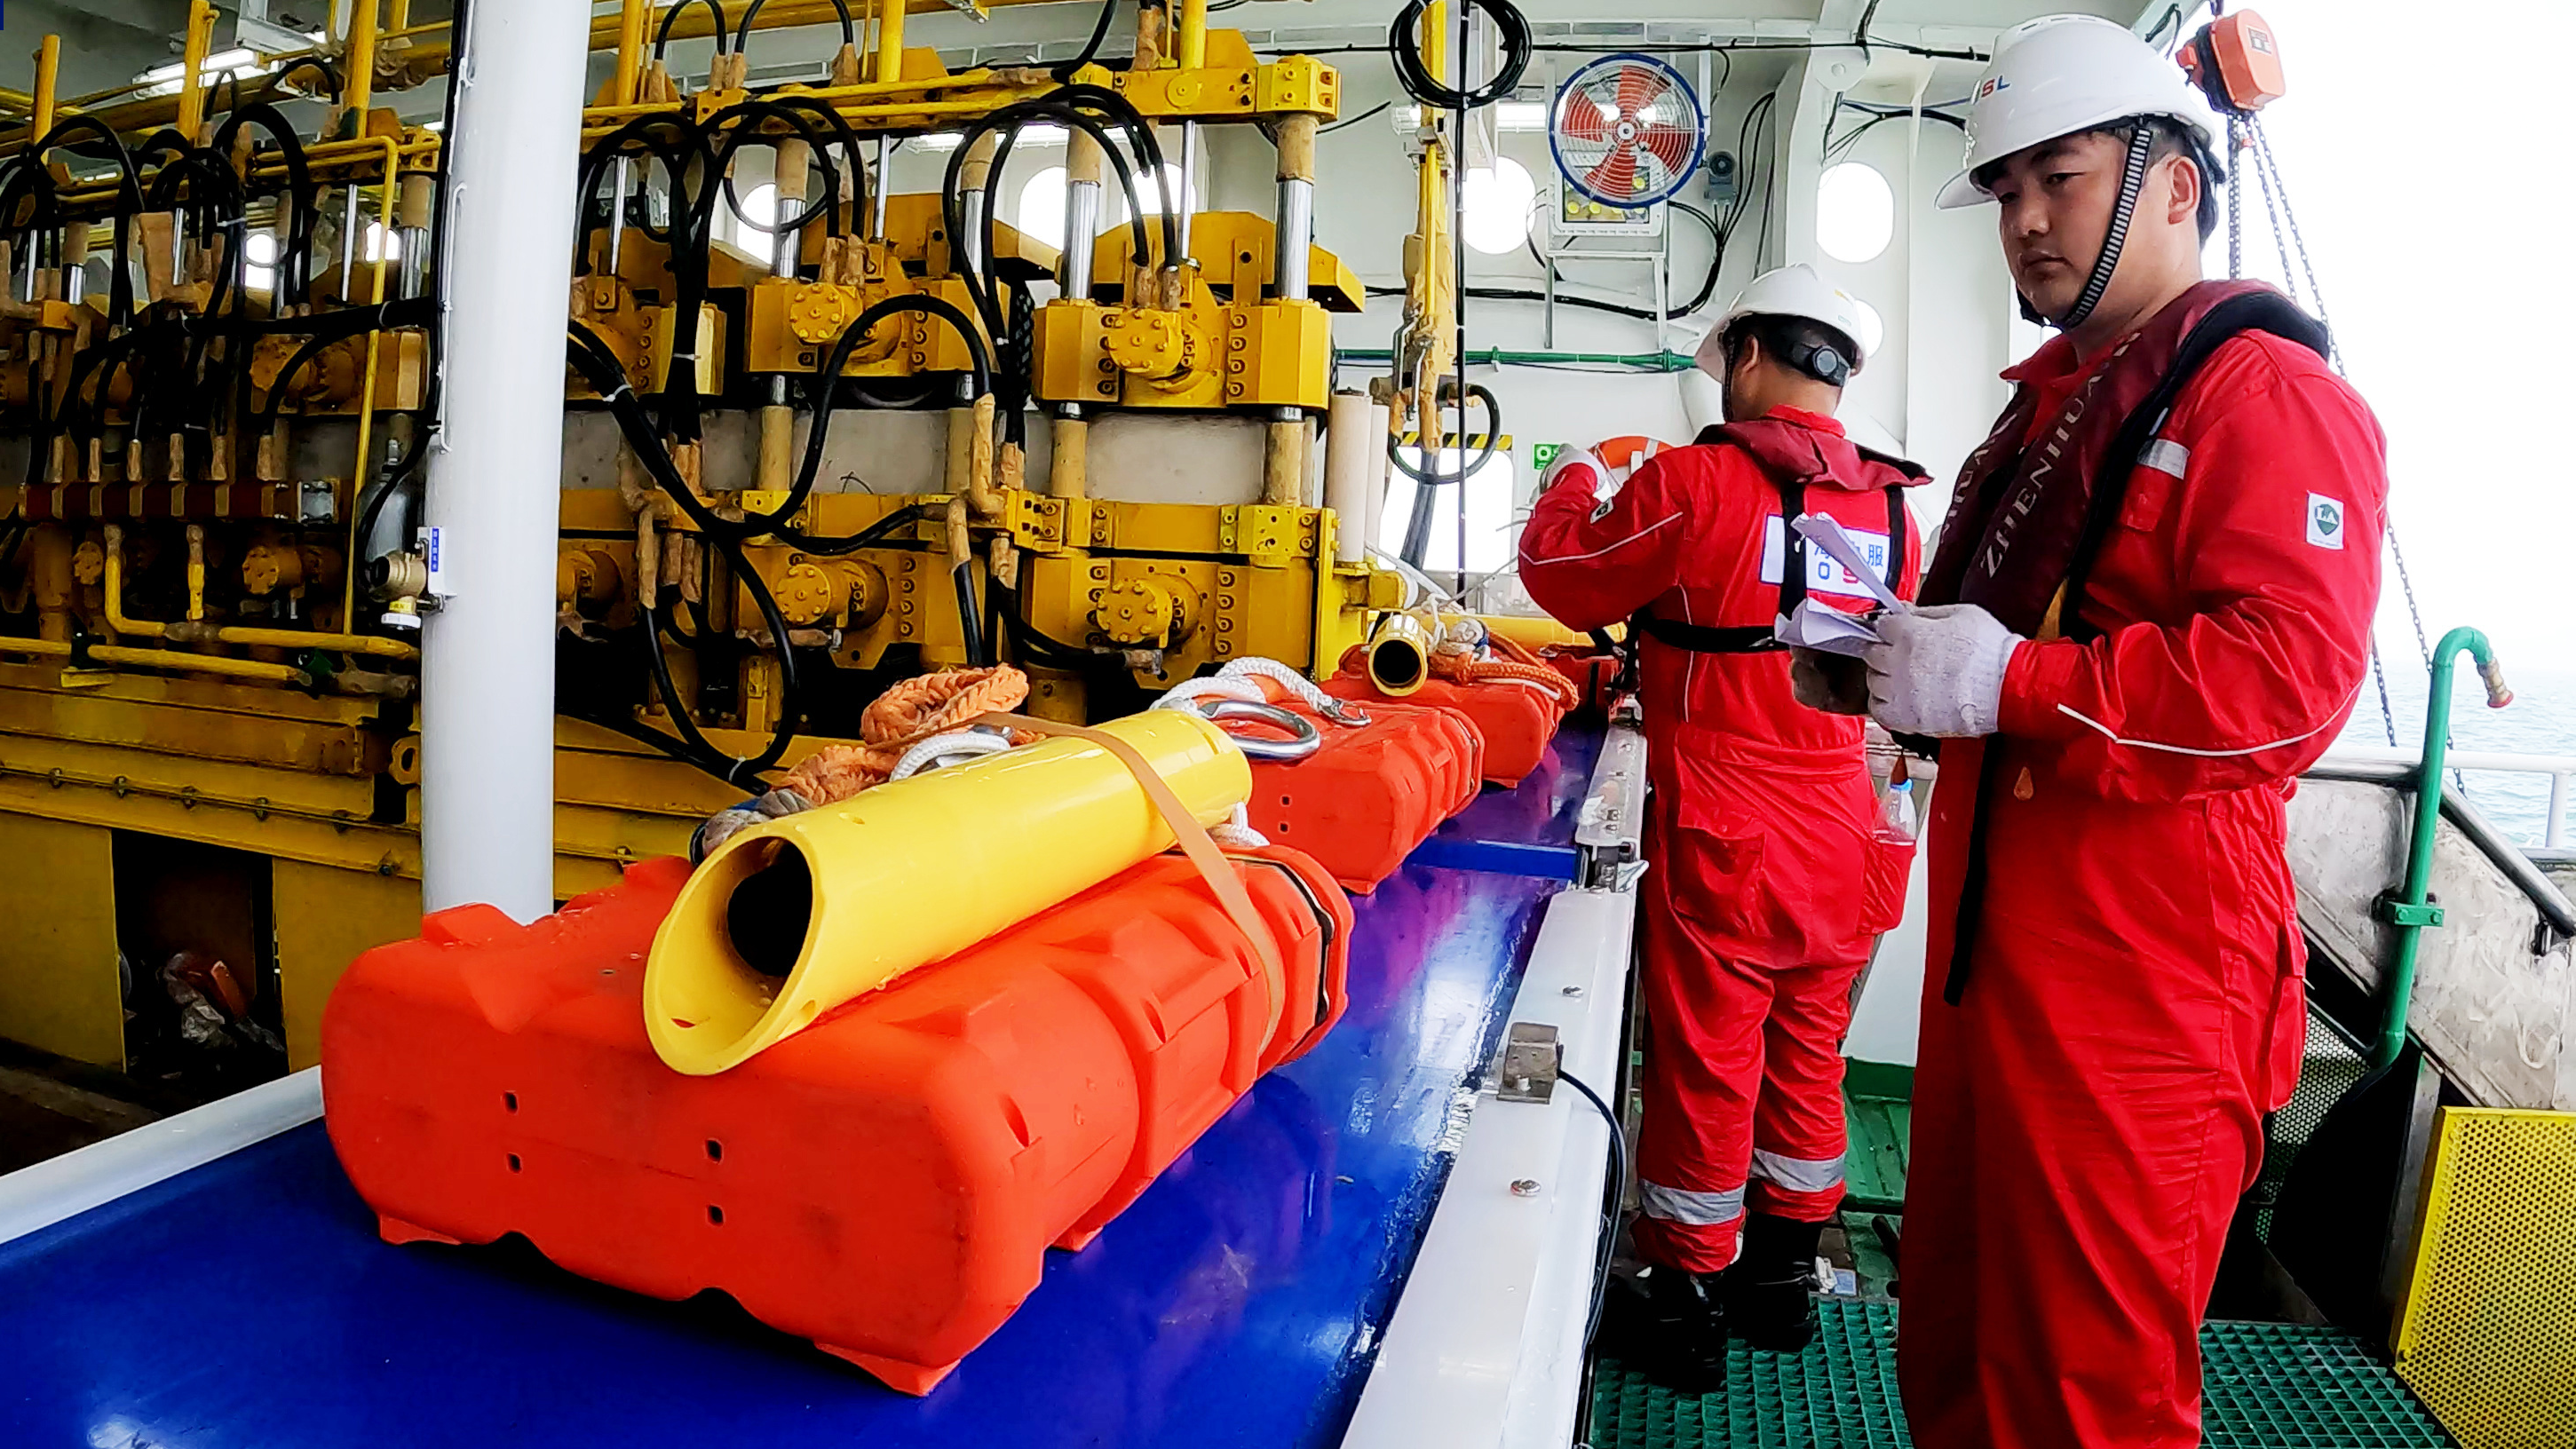 Technicians check China's self-developed undersea seismic exploration sensor Haimai, or 